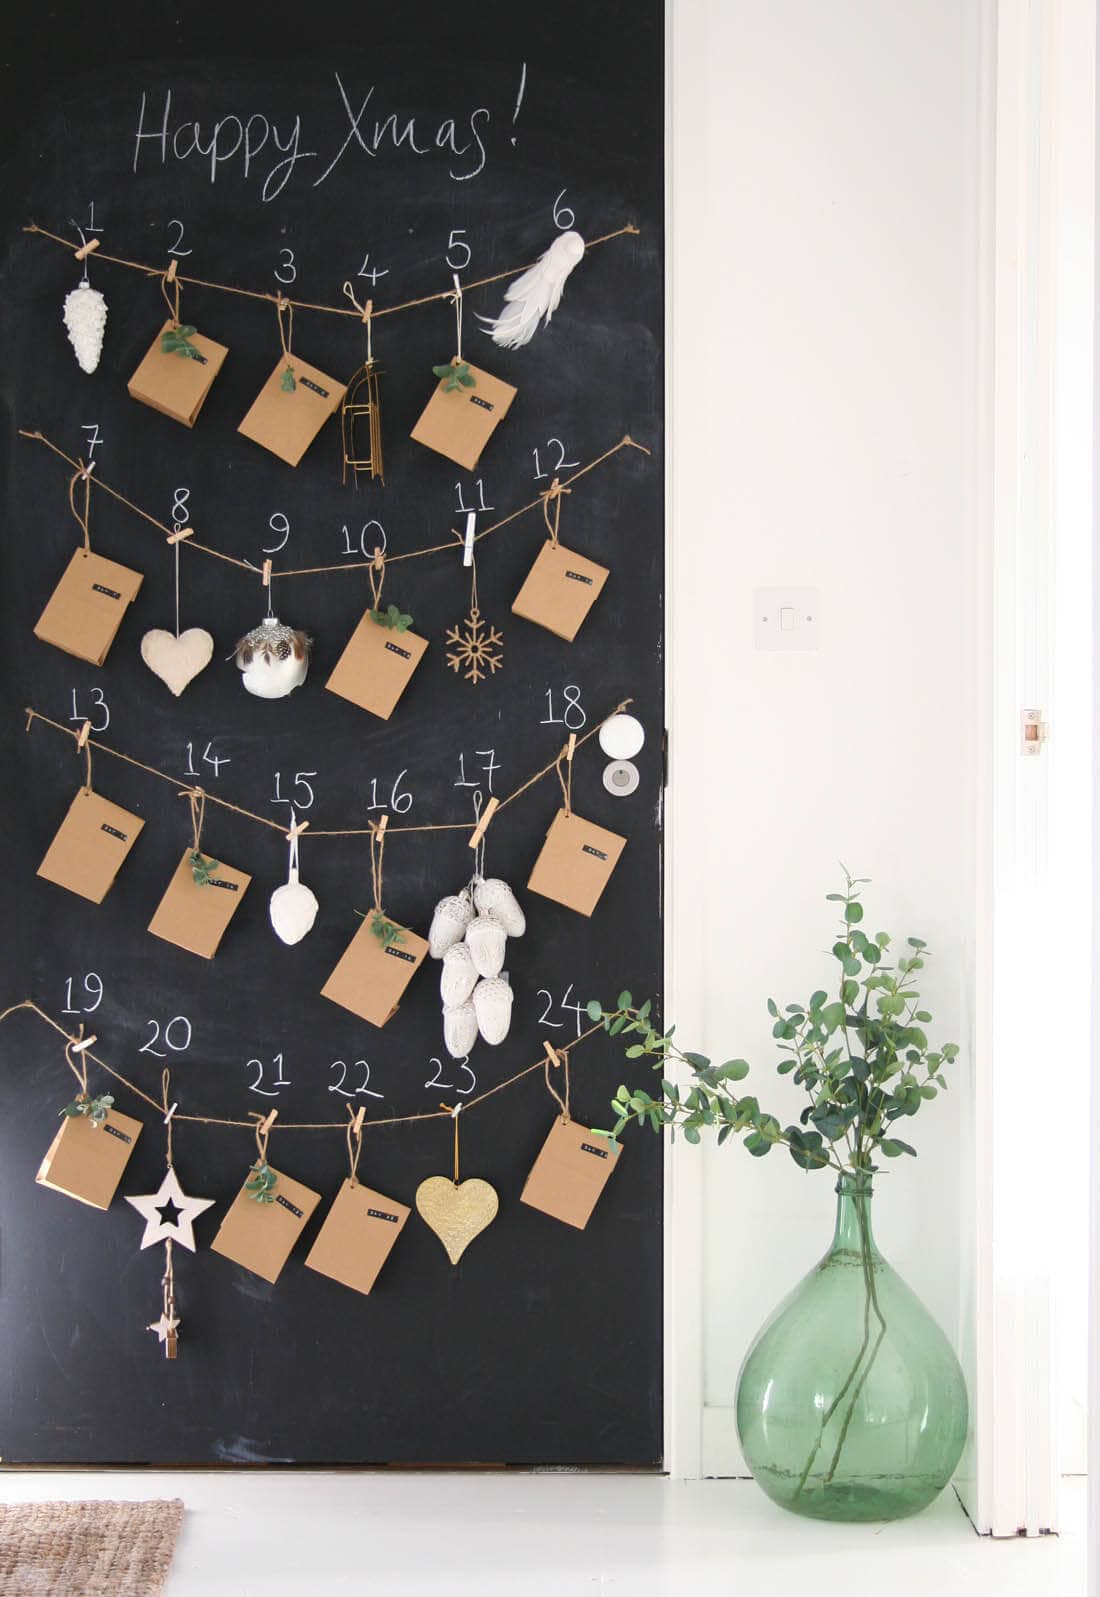 craft bag envelopes and ornaments on chalkboard advent calendar